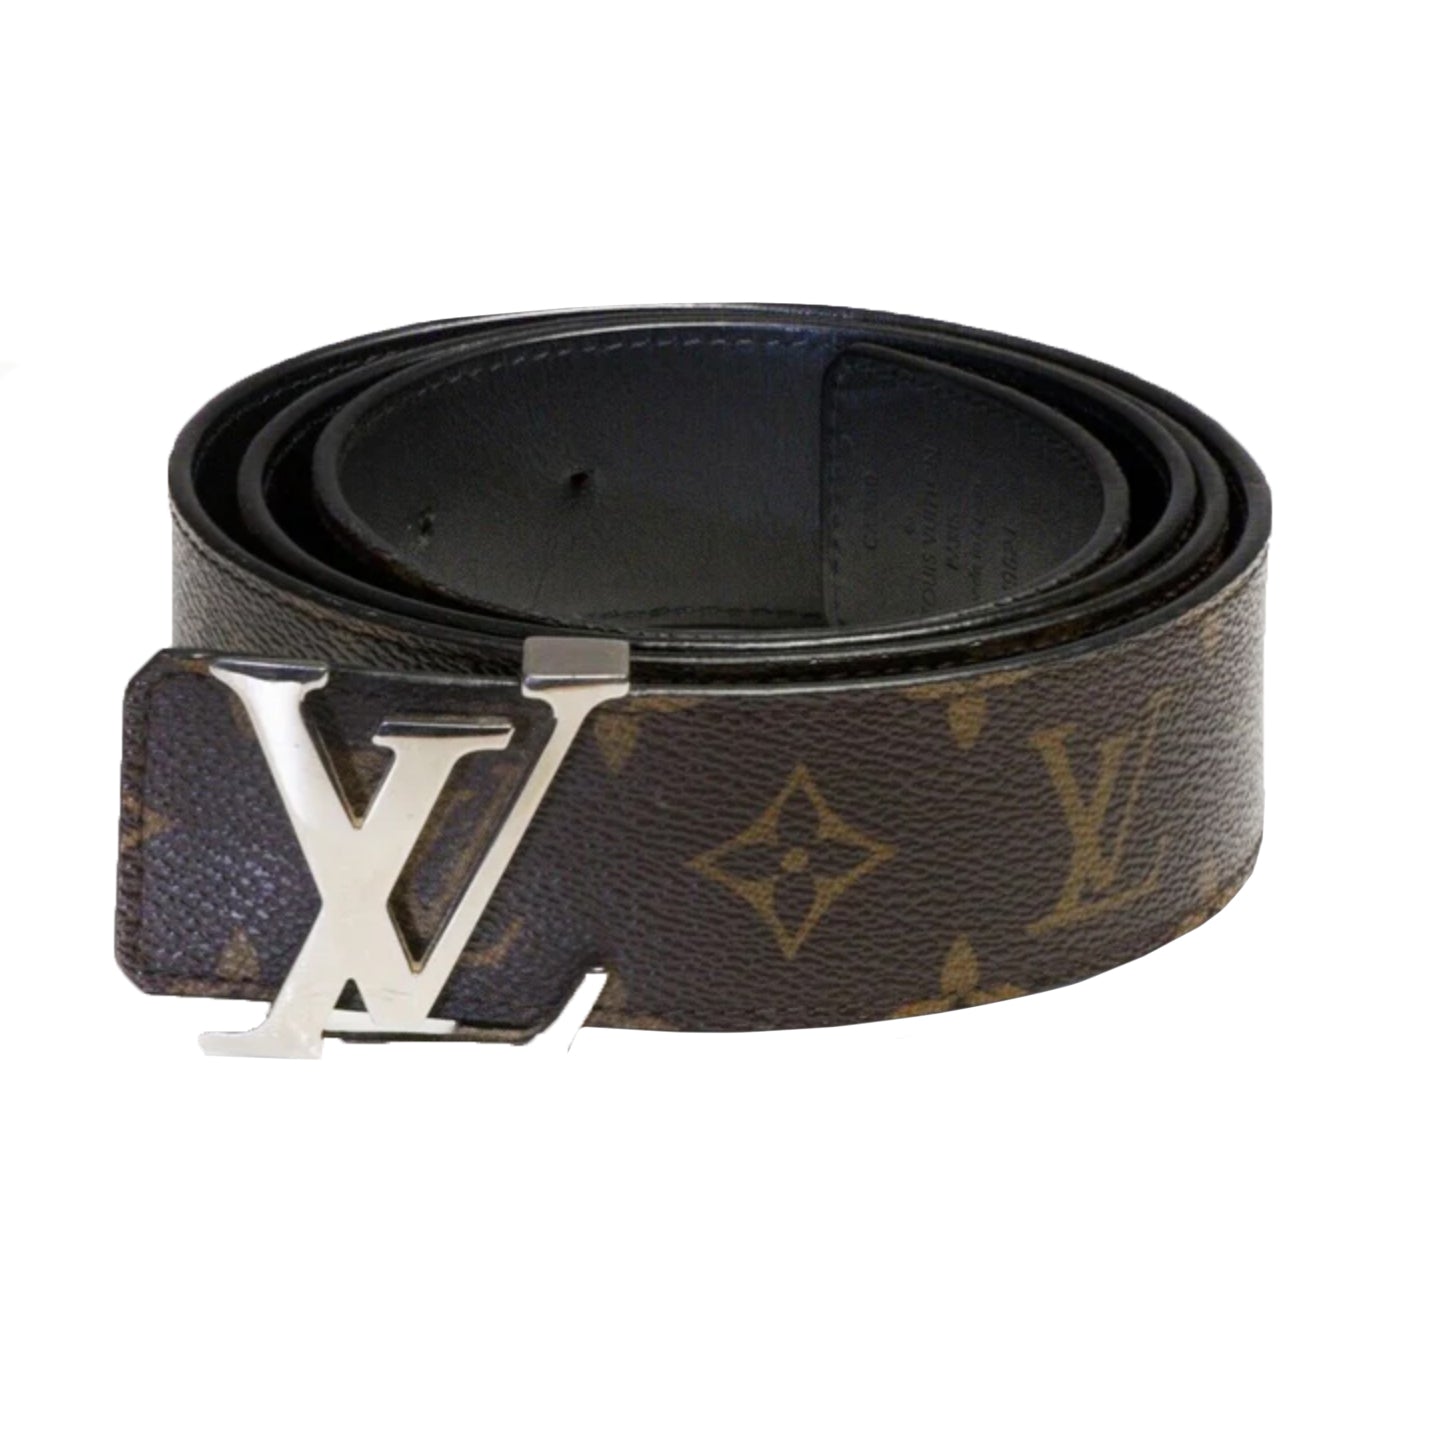 Louis Vuitton Dauphine Pearl 20mm Reversible Belt Black Beige Leather. Size 80 cm